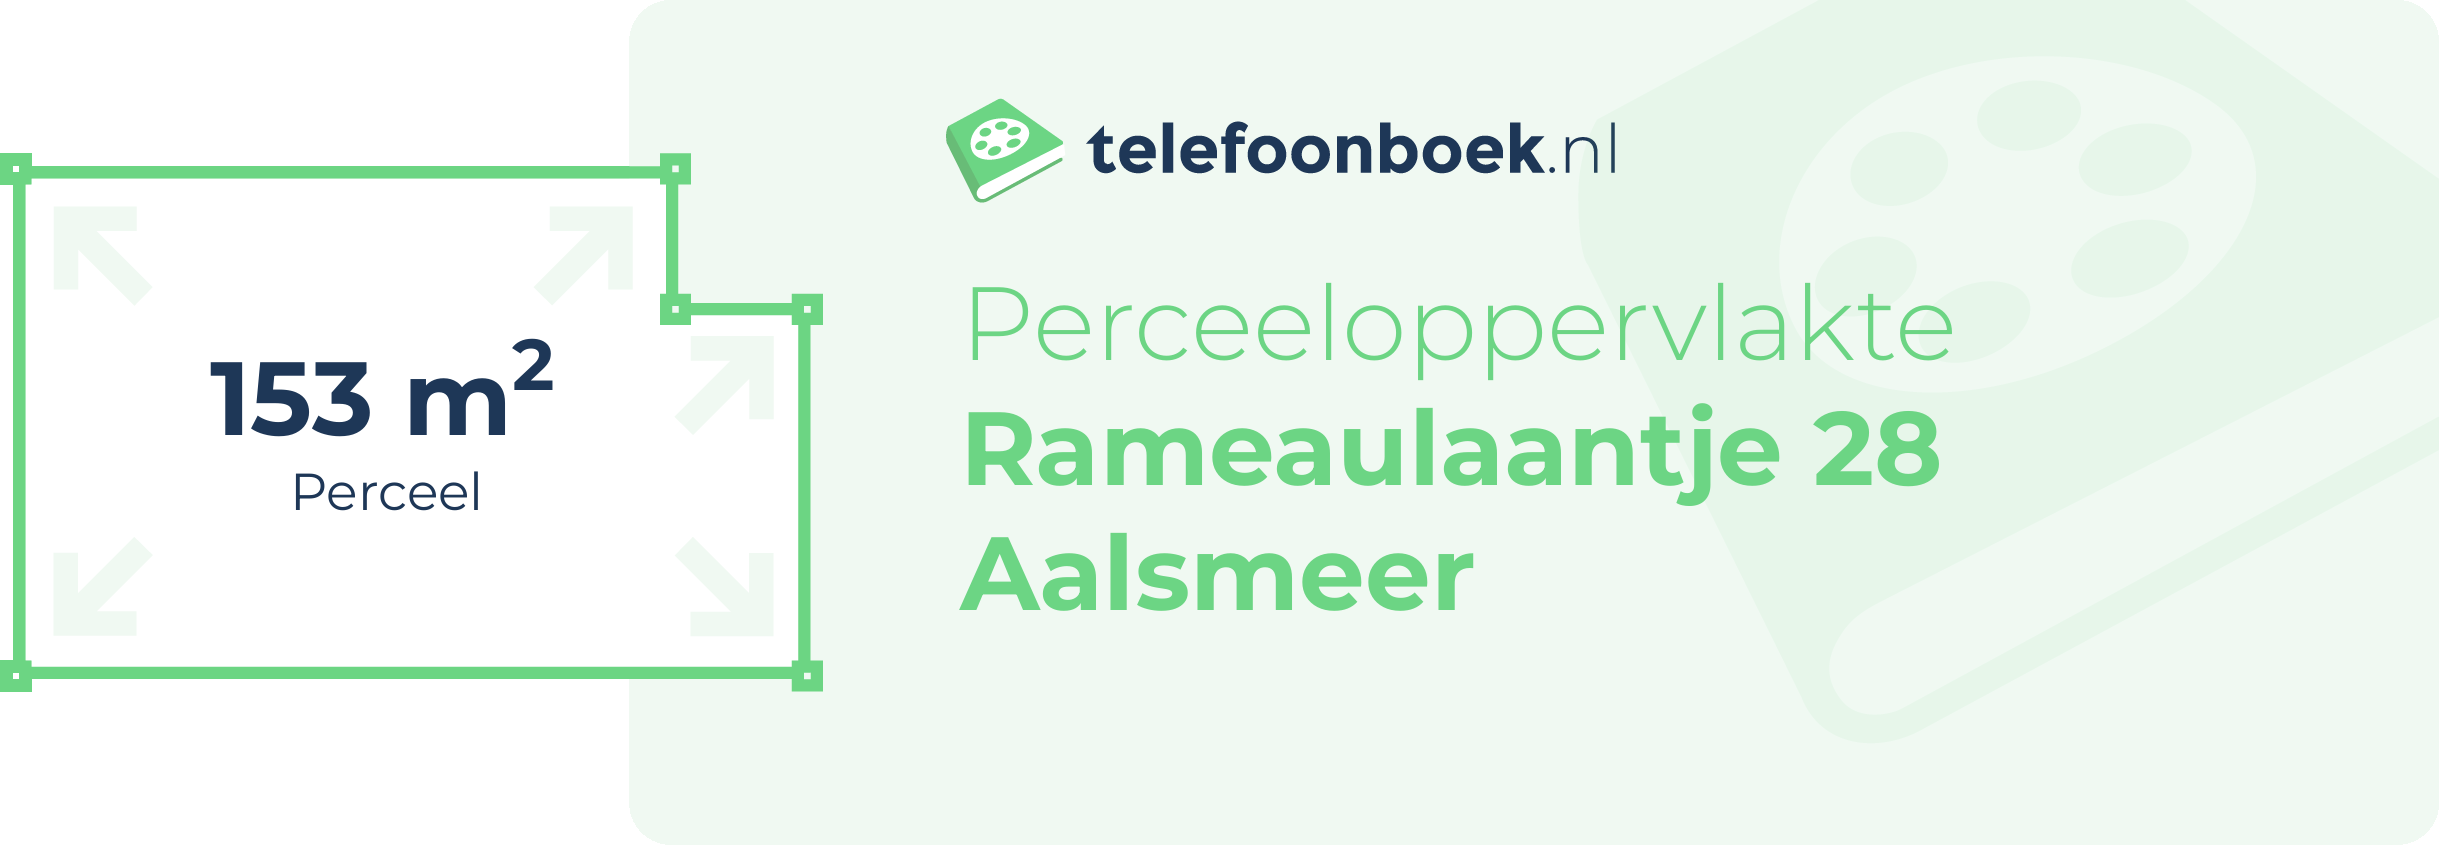 Perceeloppervlakte Rameaulaantje 28 Aalsmeer